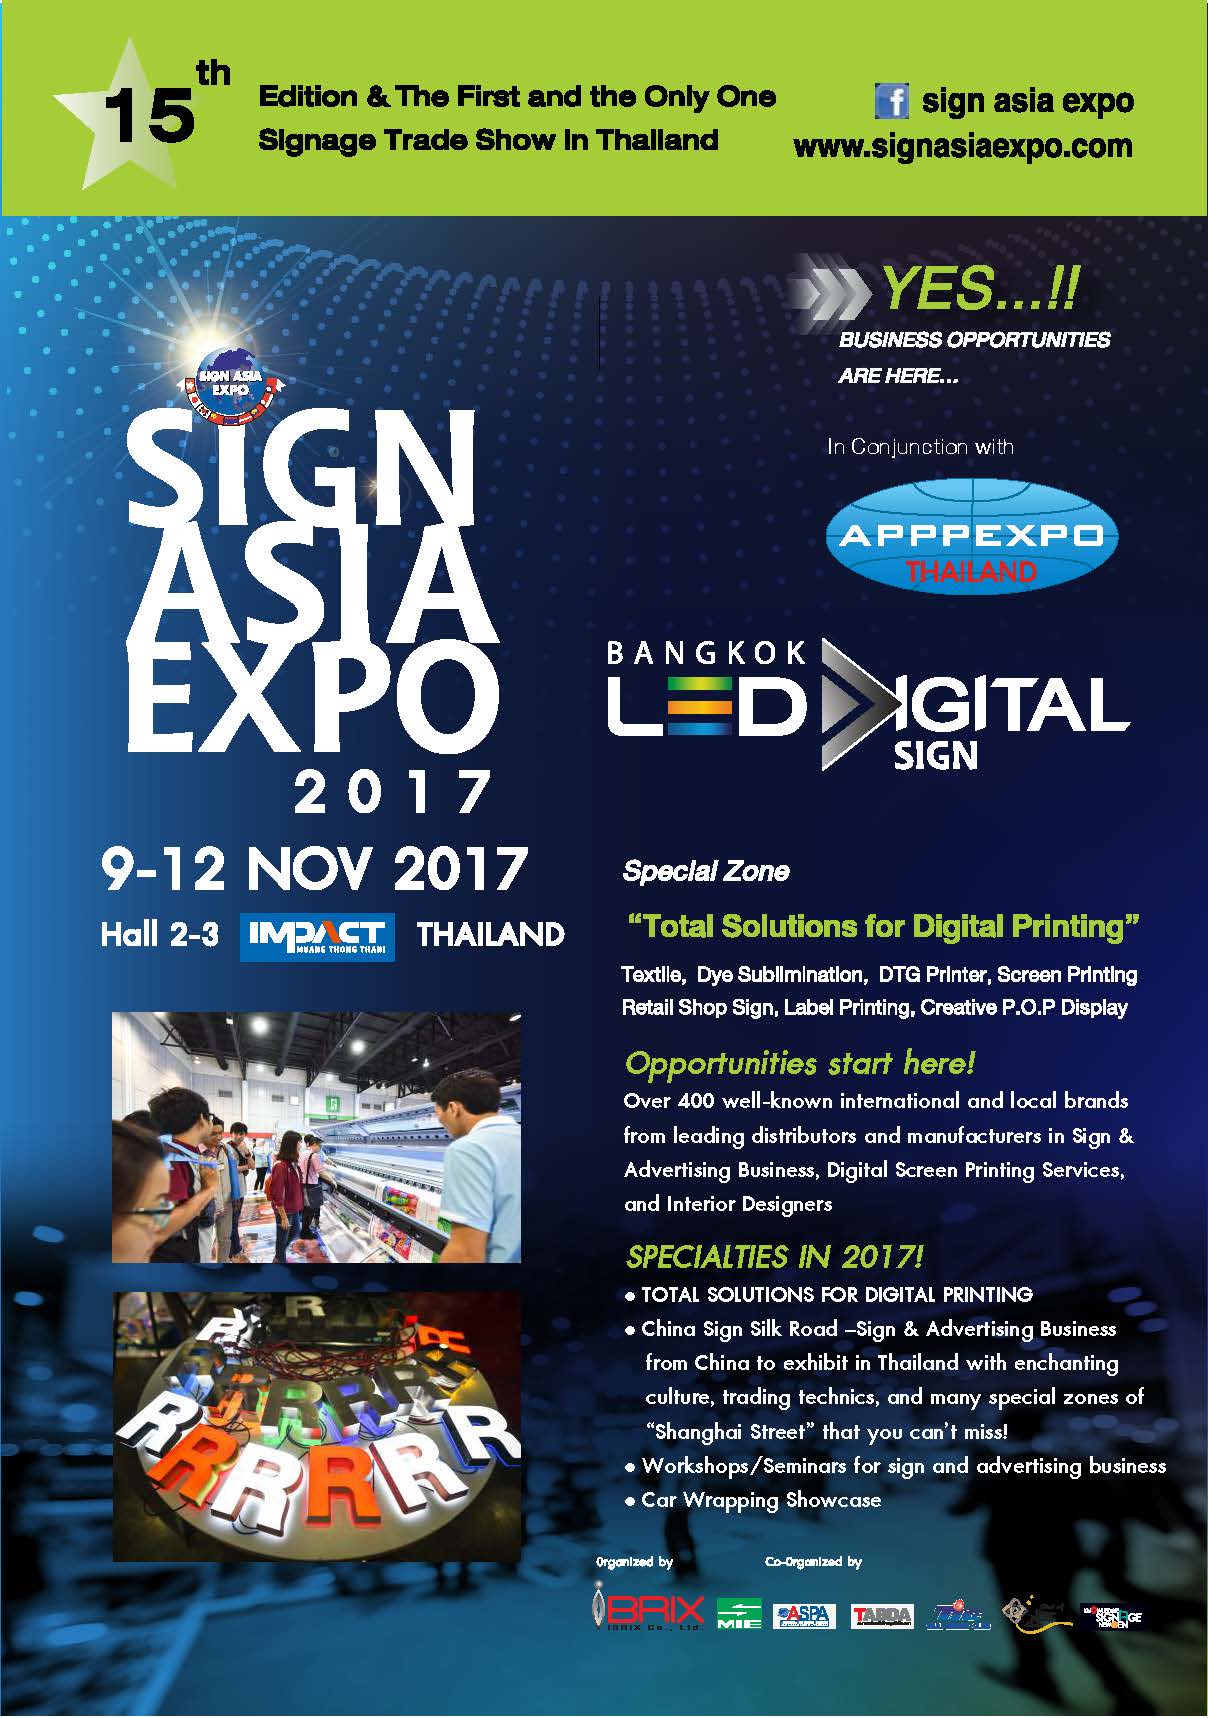 Sign Asia Expo 2017 & Bangkok LED & Digital Sign 2017